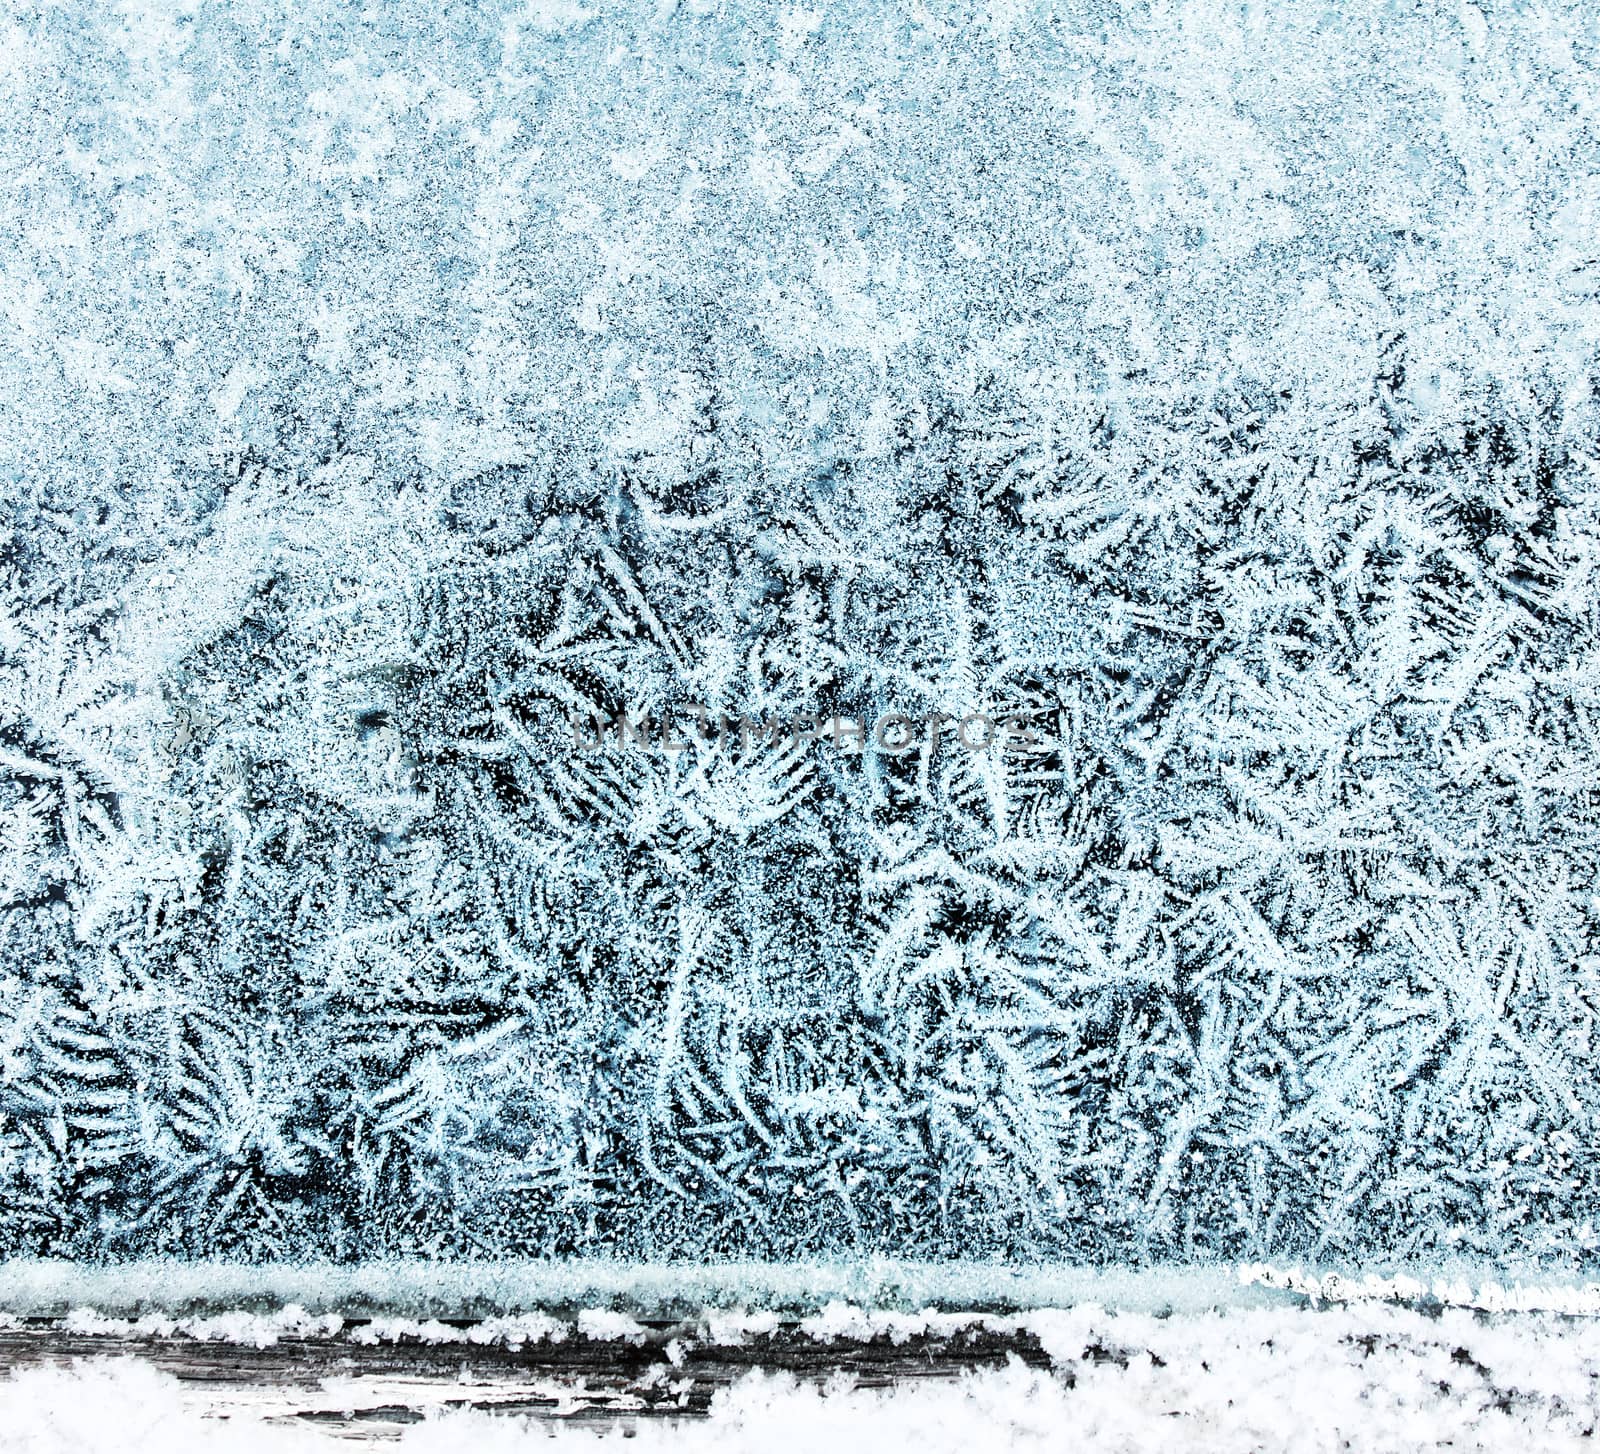 Frosty window ice pattern by anterovium